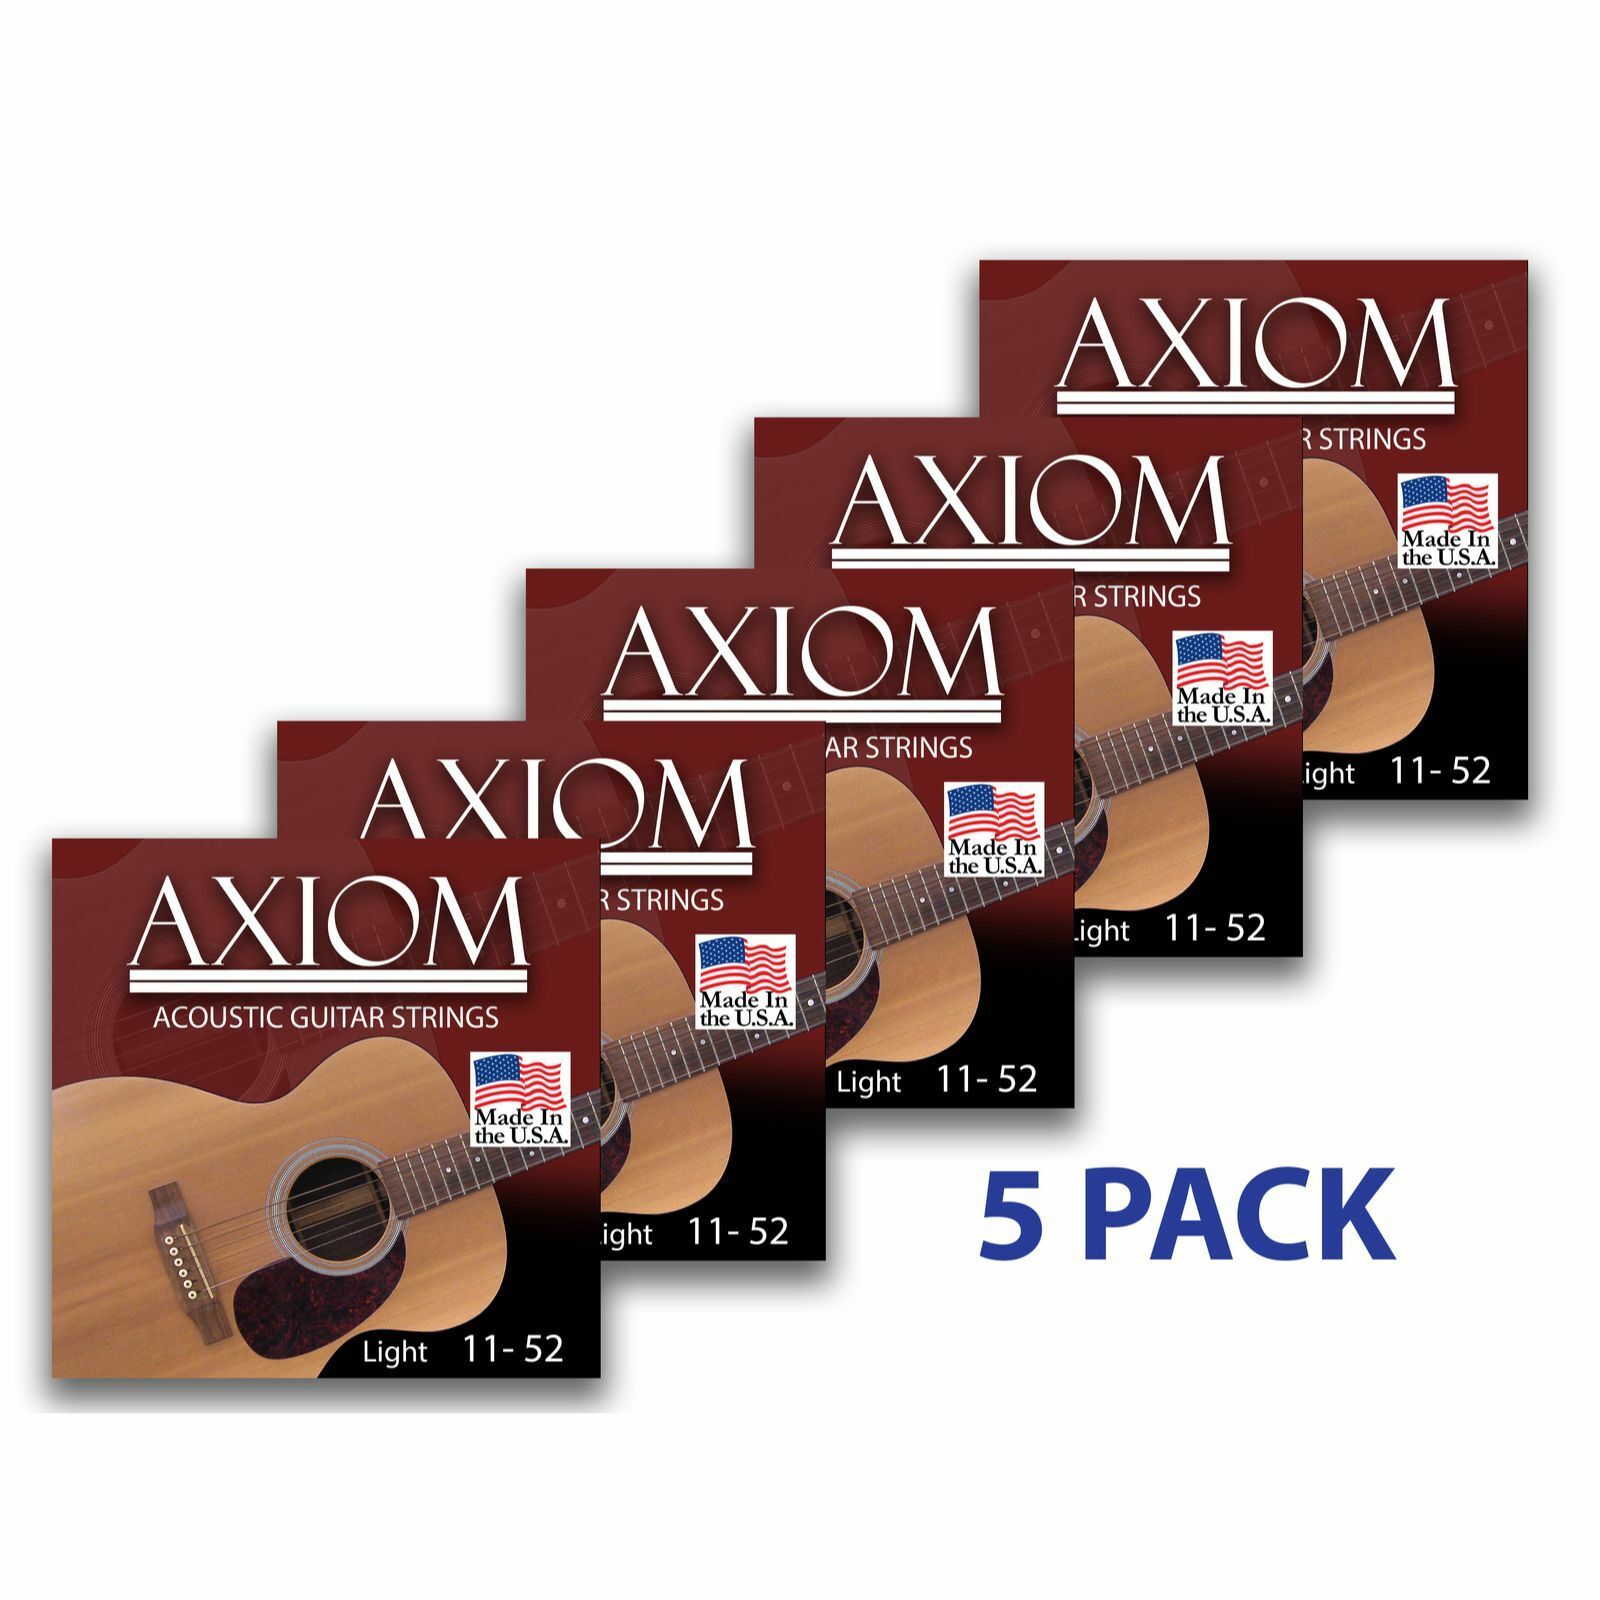 Axiom 5 Pack - Acoustic Guitar Strings - Light